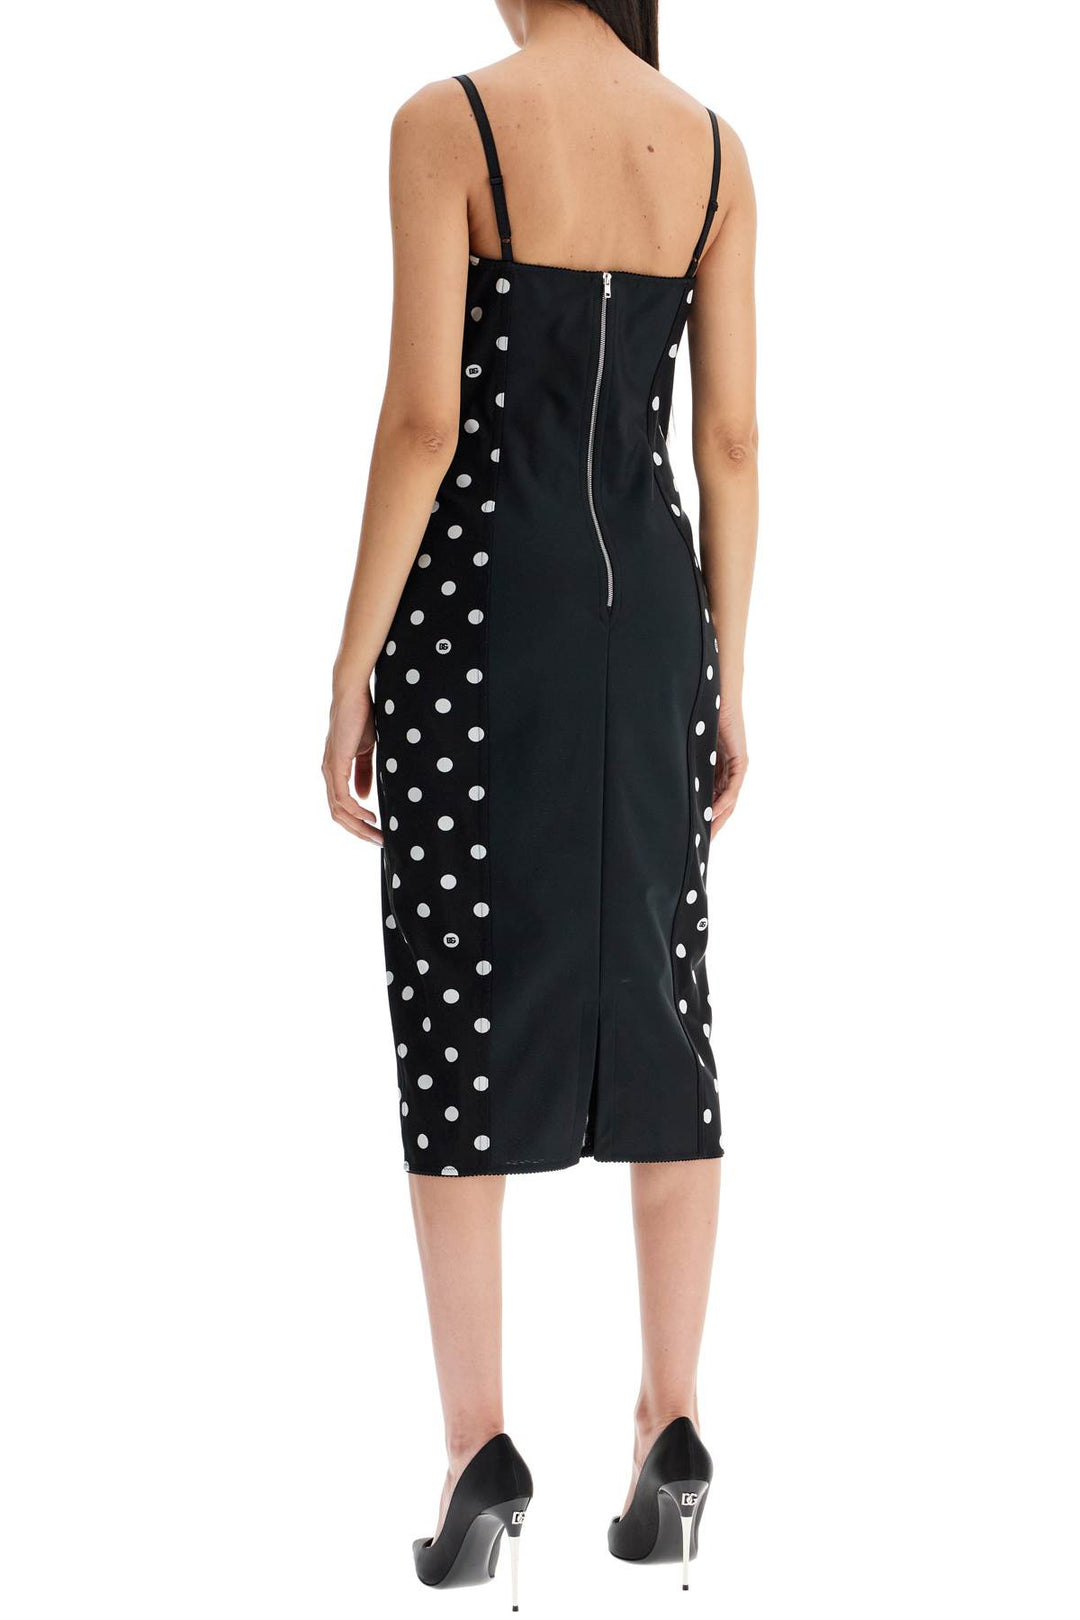 Dolce & Gabbana Polka Dot Bustier Dress   Black